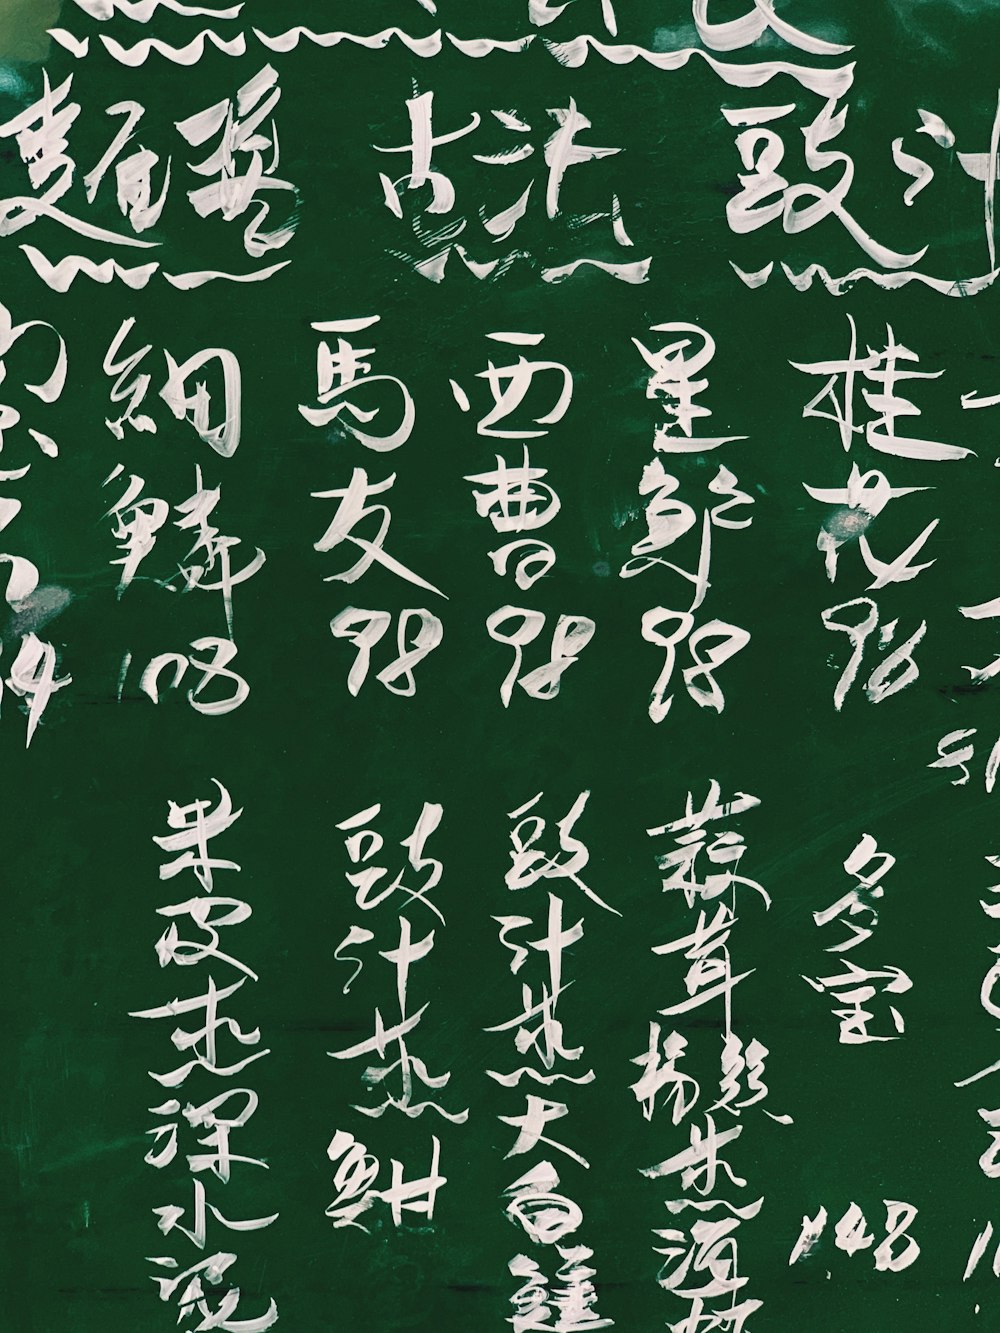 green and white kanji text